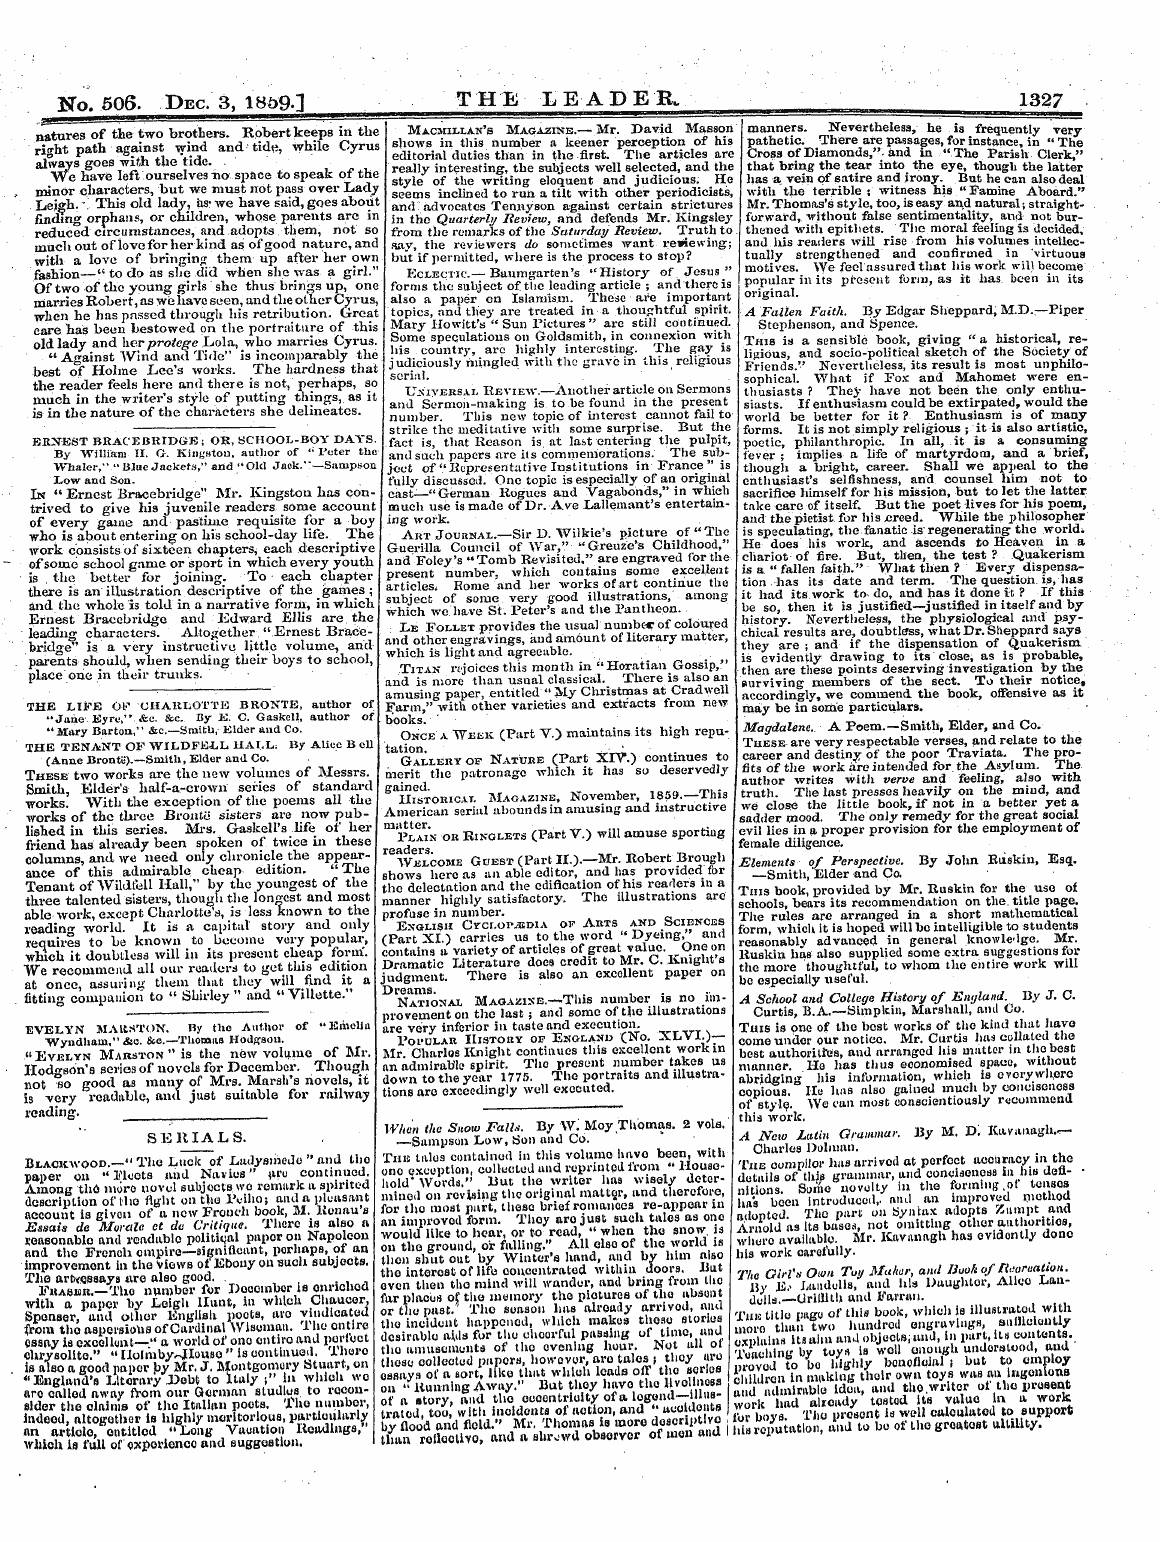 Leader (1850-1860): jS F Y, 2nd edition - Qviitatq